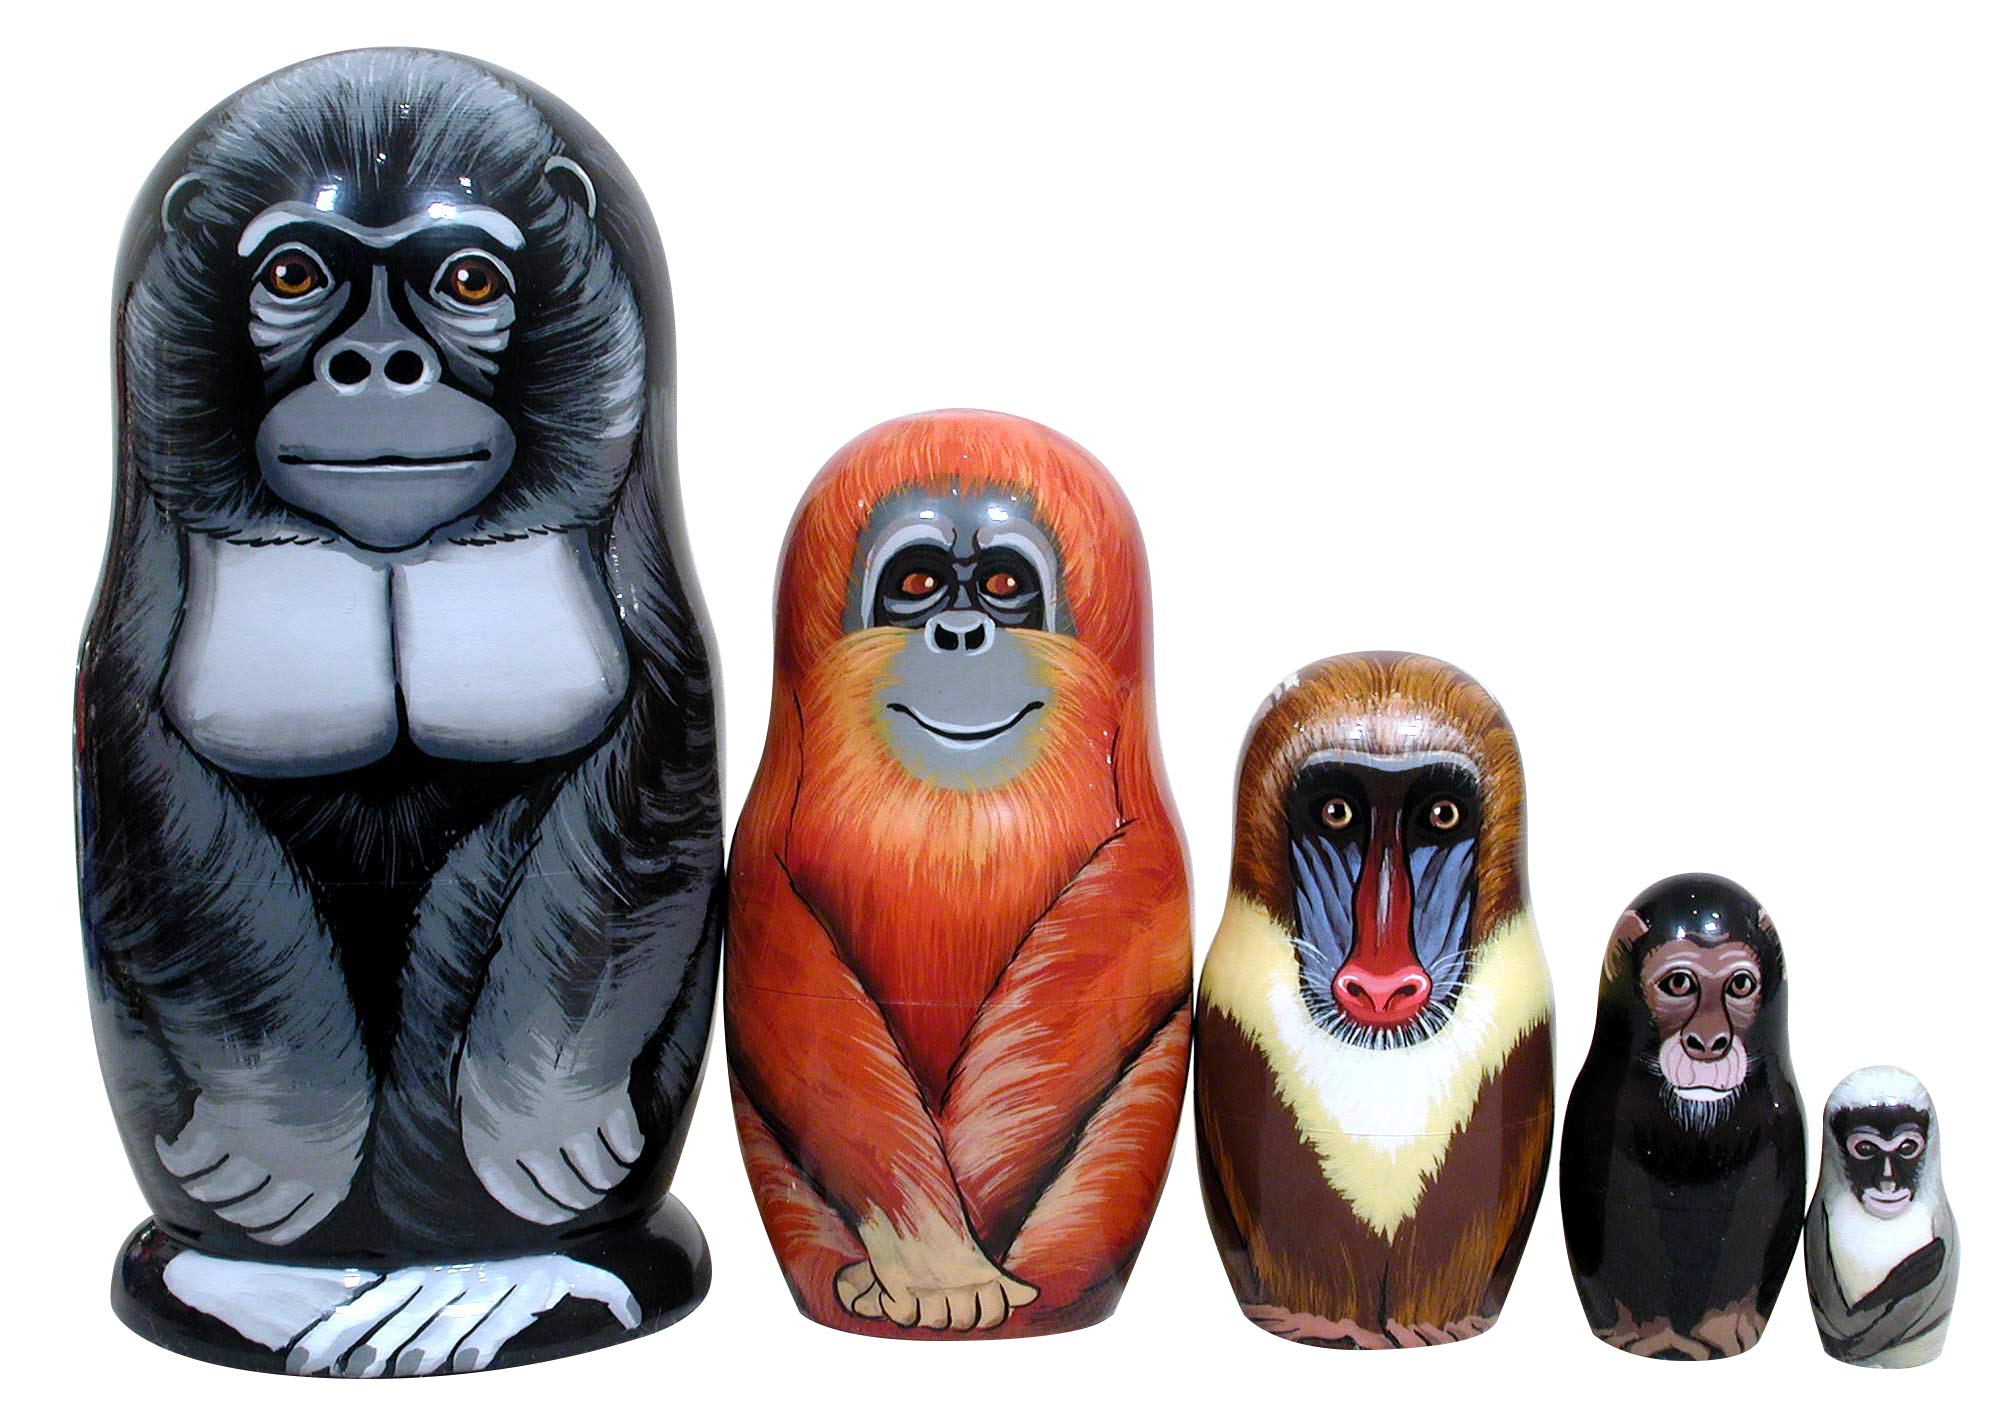 Buy Apes & Monkeys Nesting Doll 5pc./6" at GoldenCockerel.com